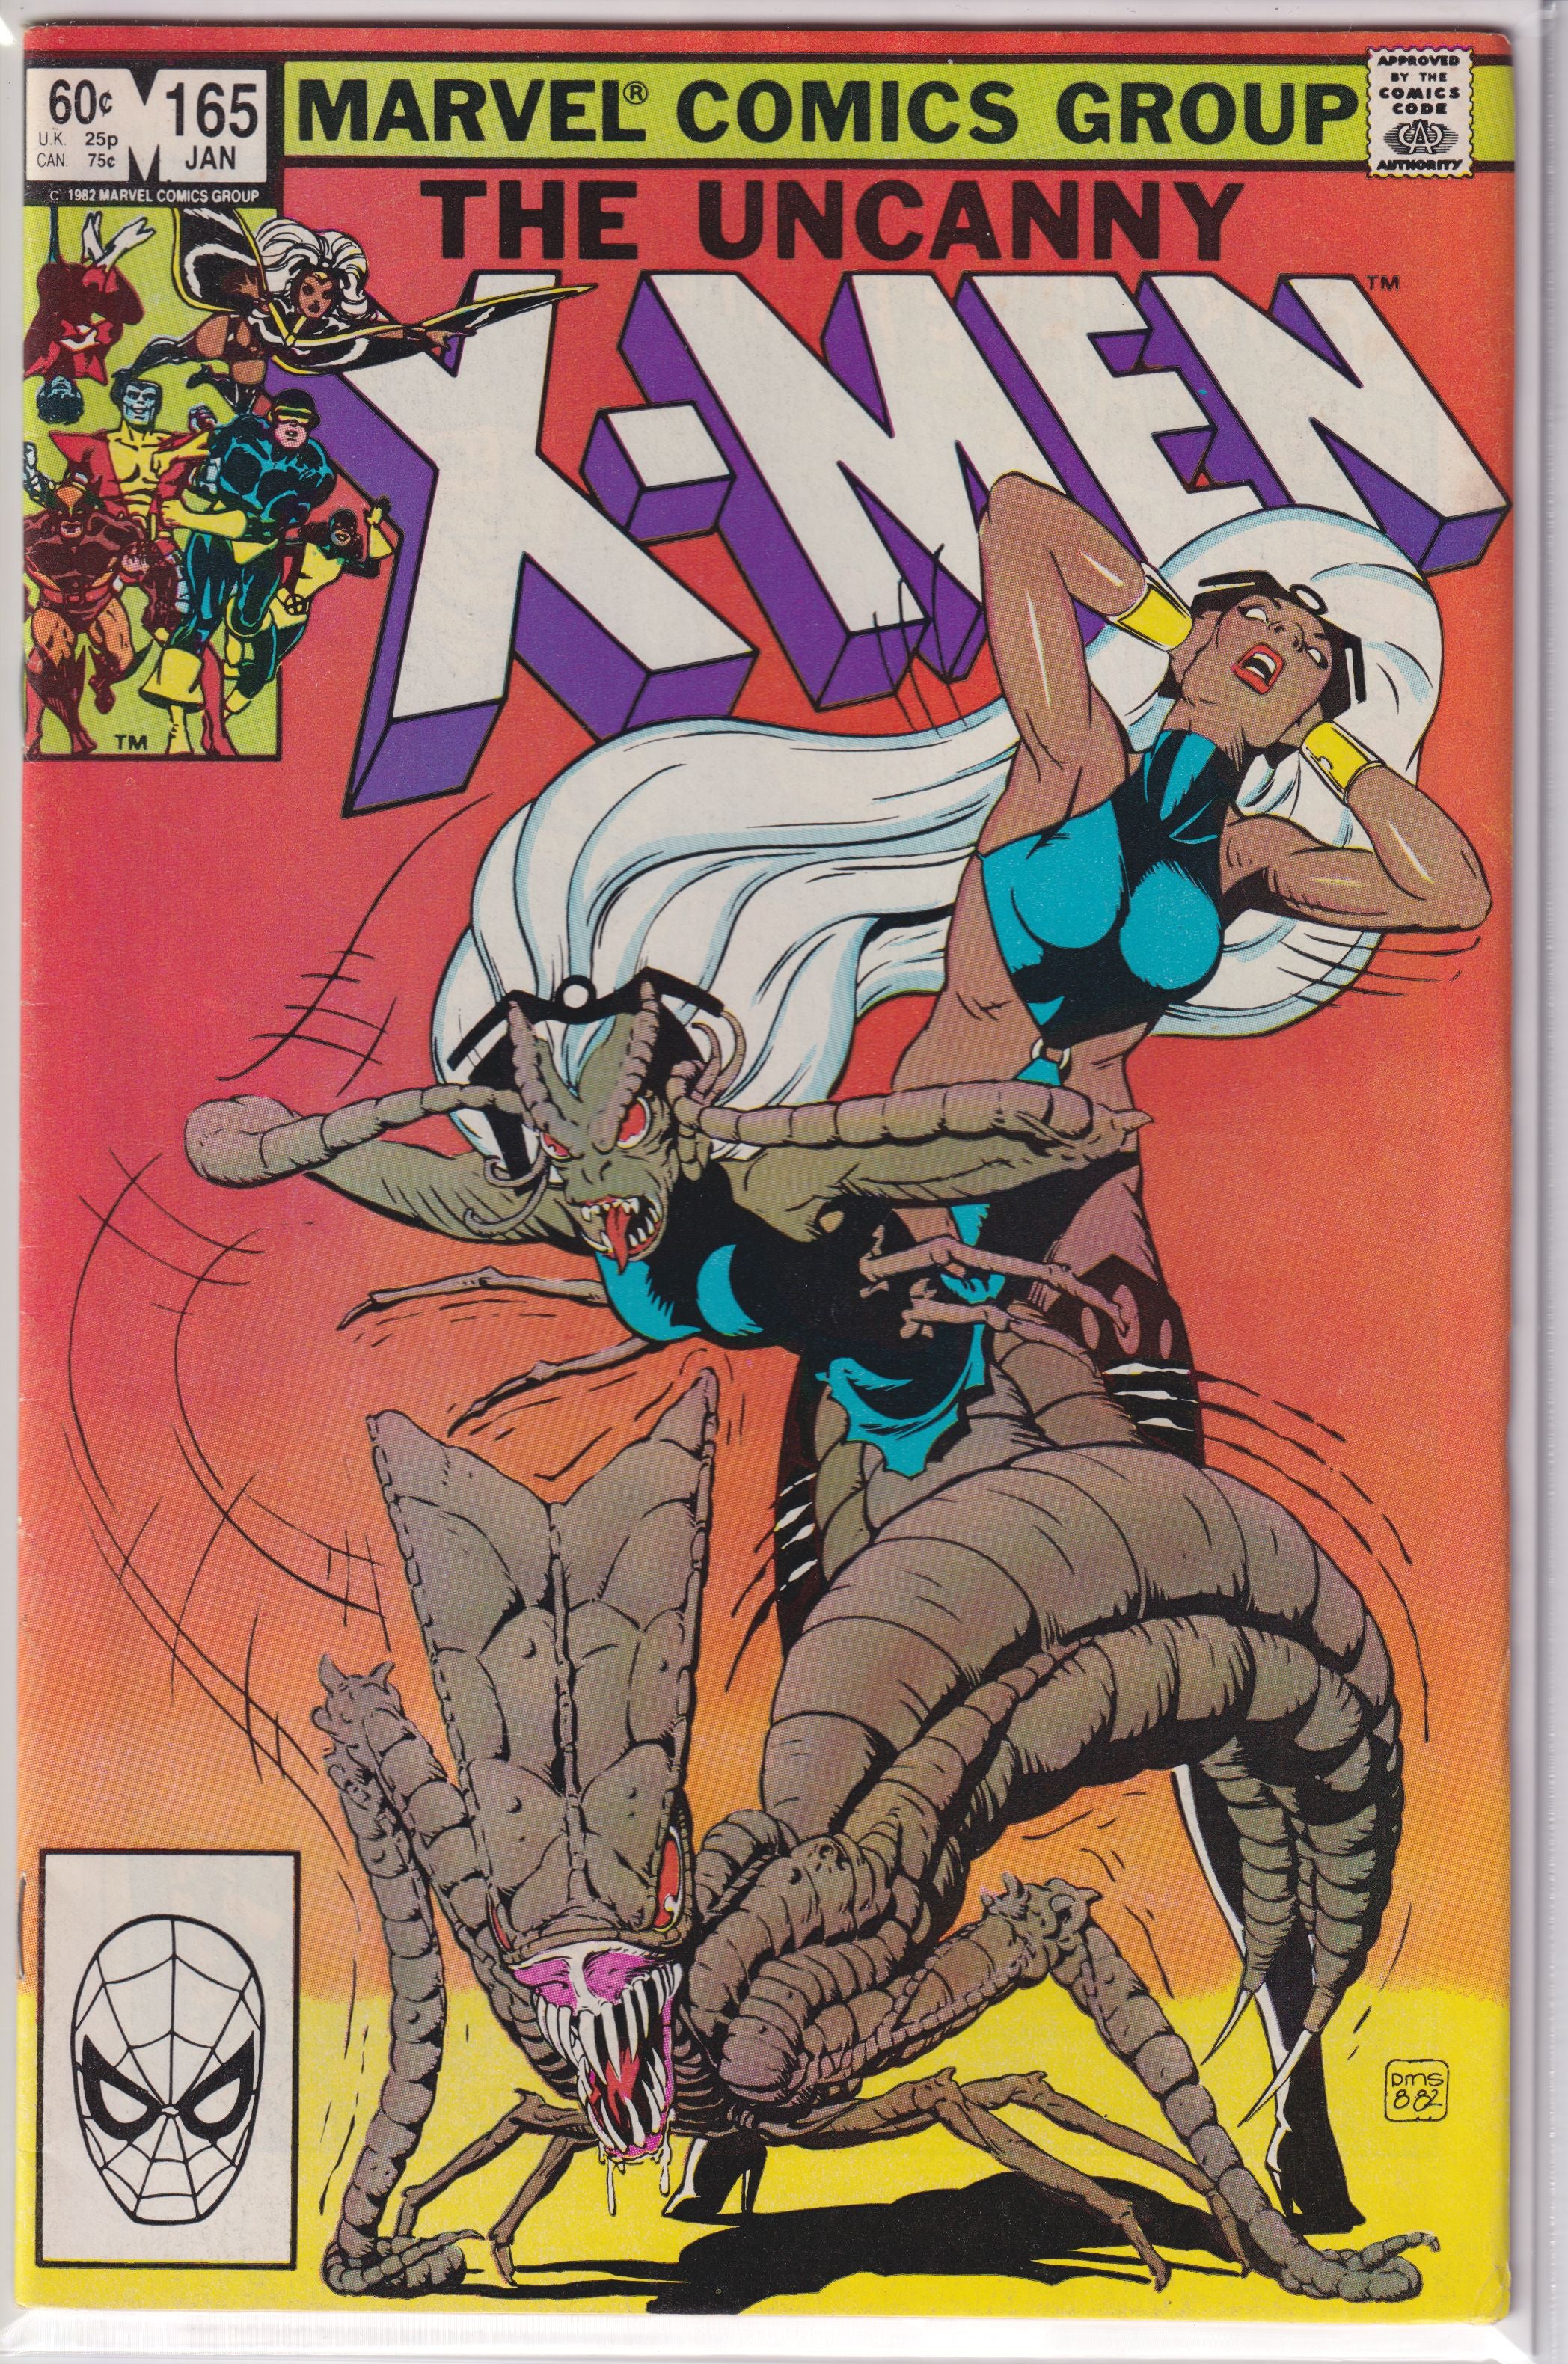 UNCANNY X-MEN (1981) #165 FN+